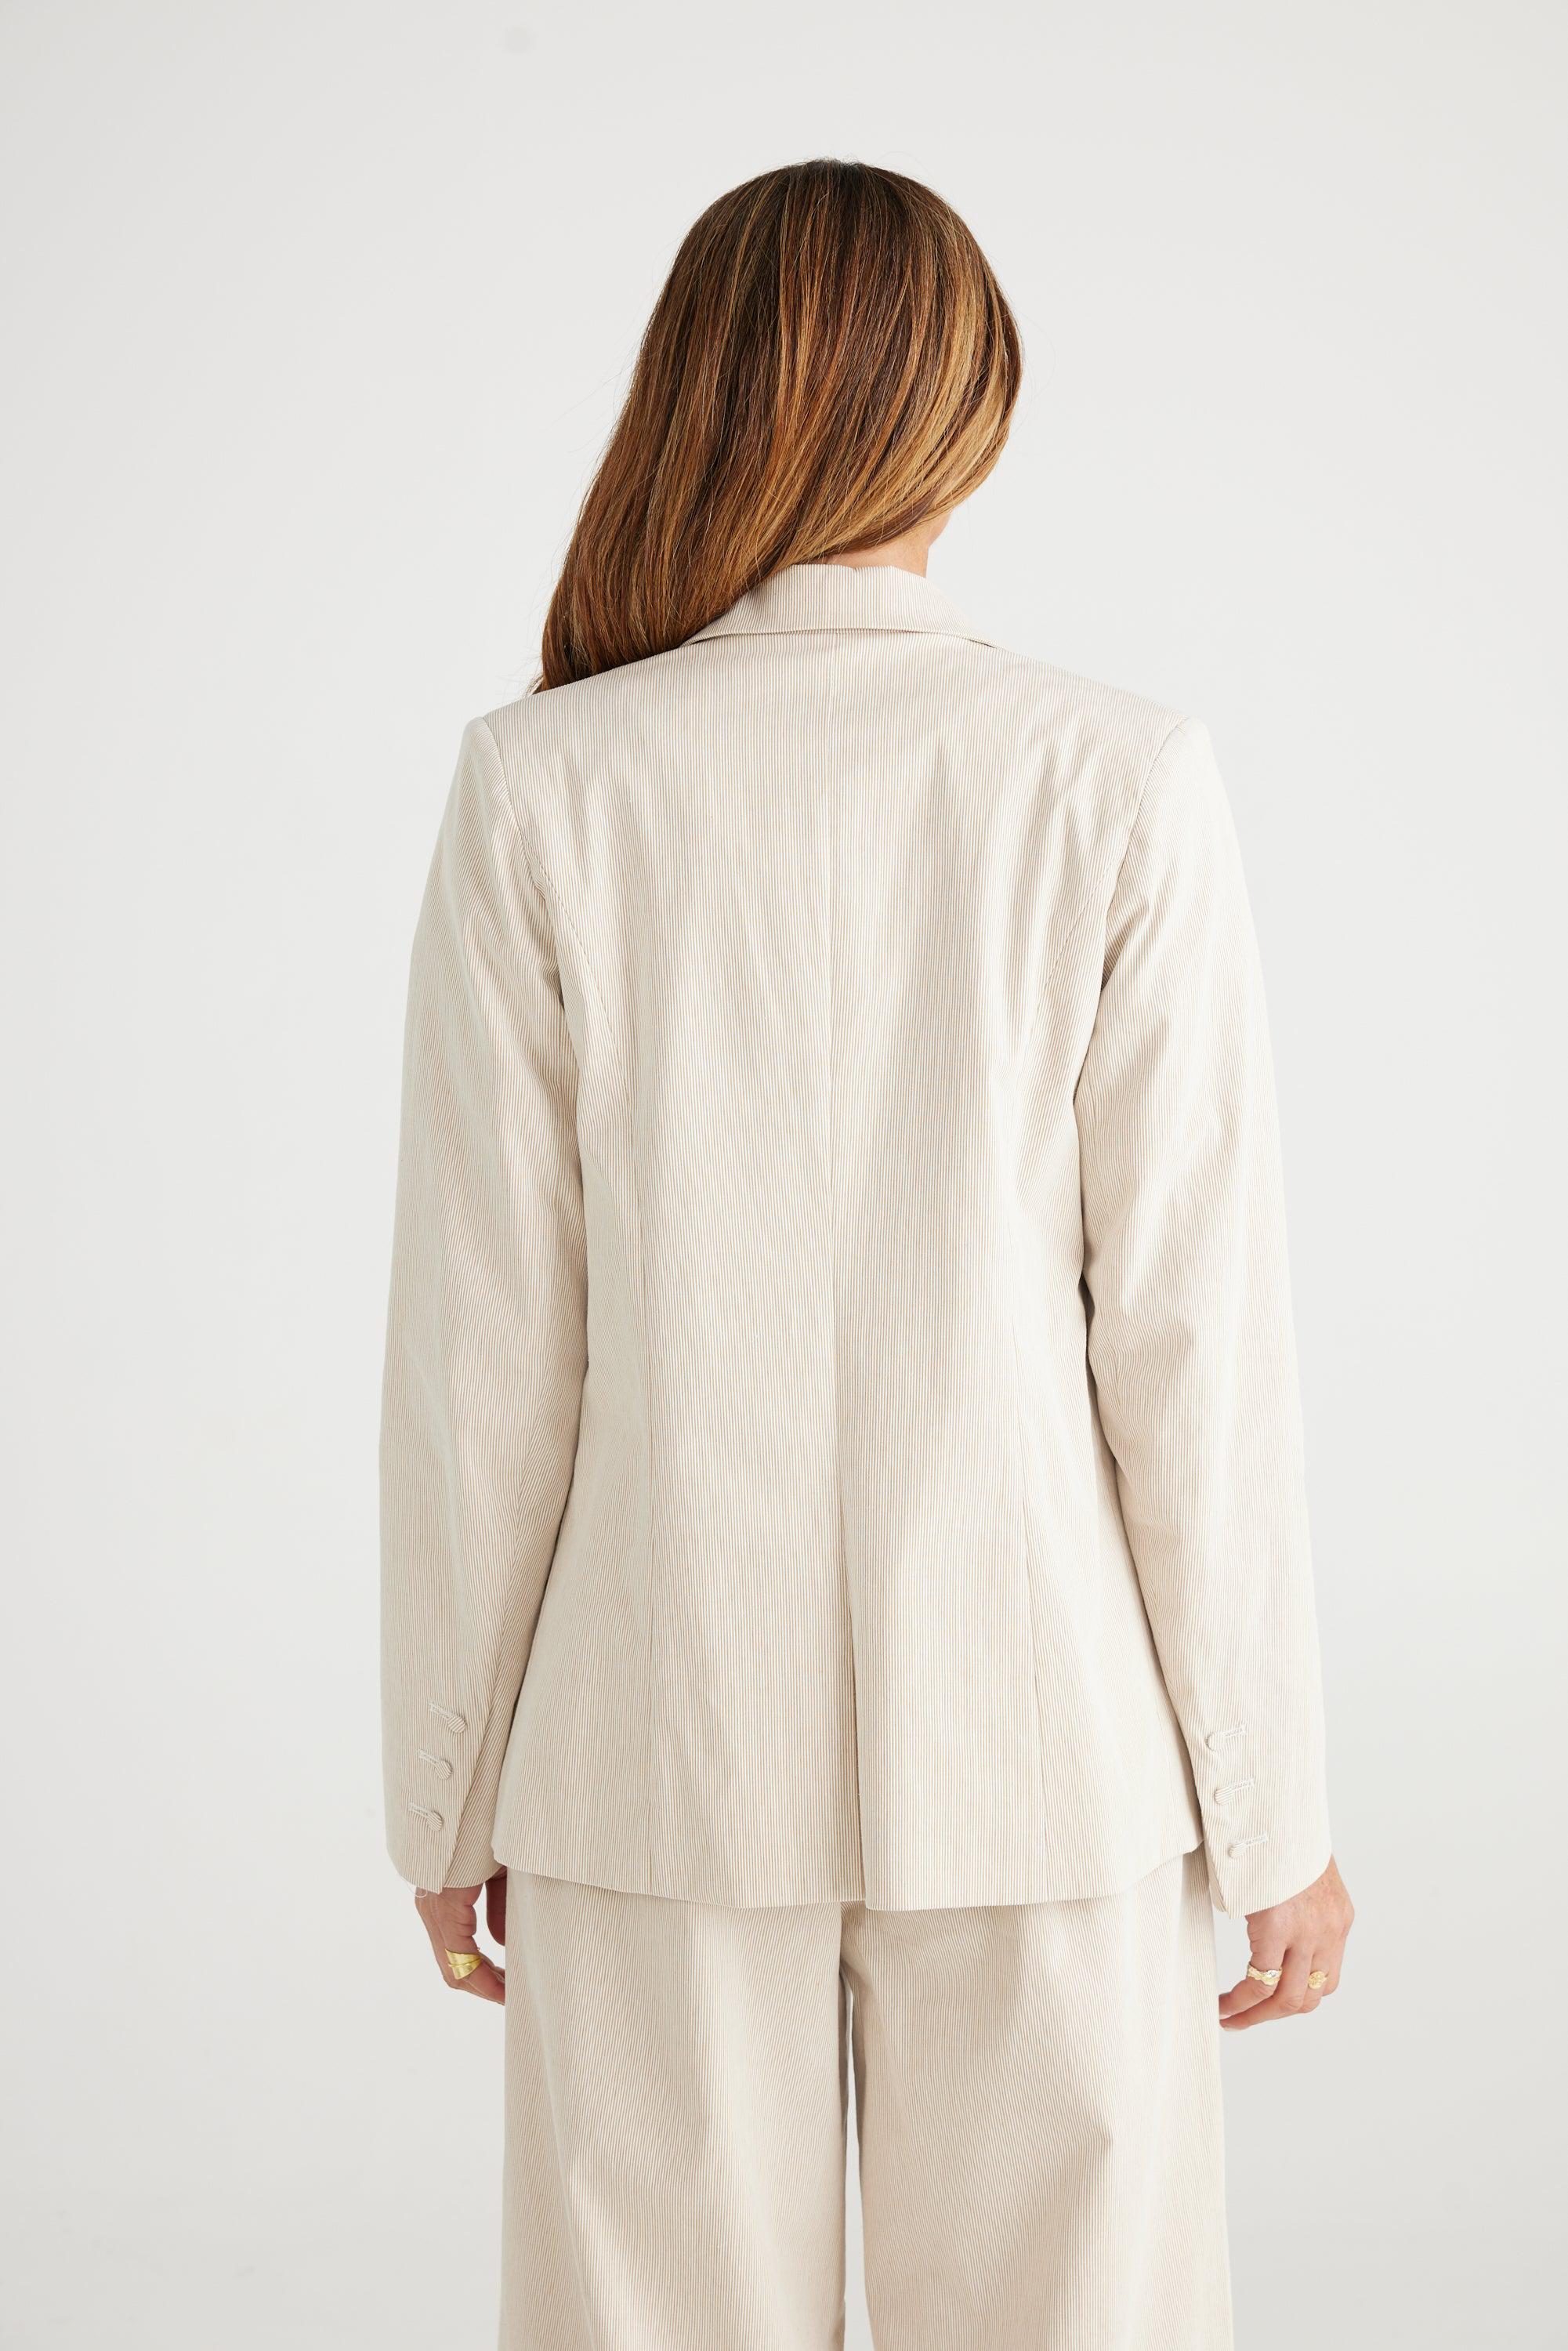 Elevate Jacket - Bone/White Stripe-Jackets, Coats & Vests-Brave & True-The Bay Room